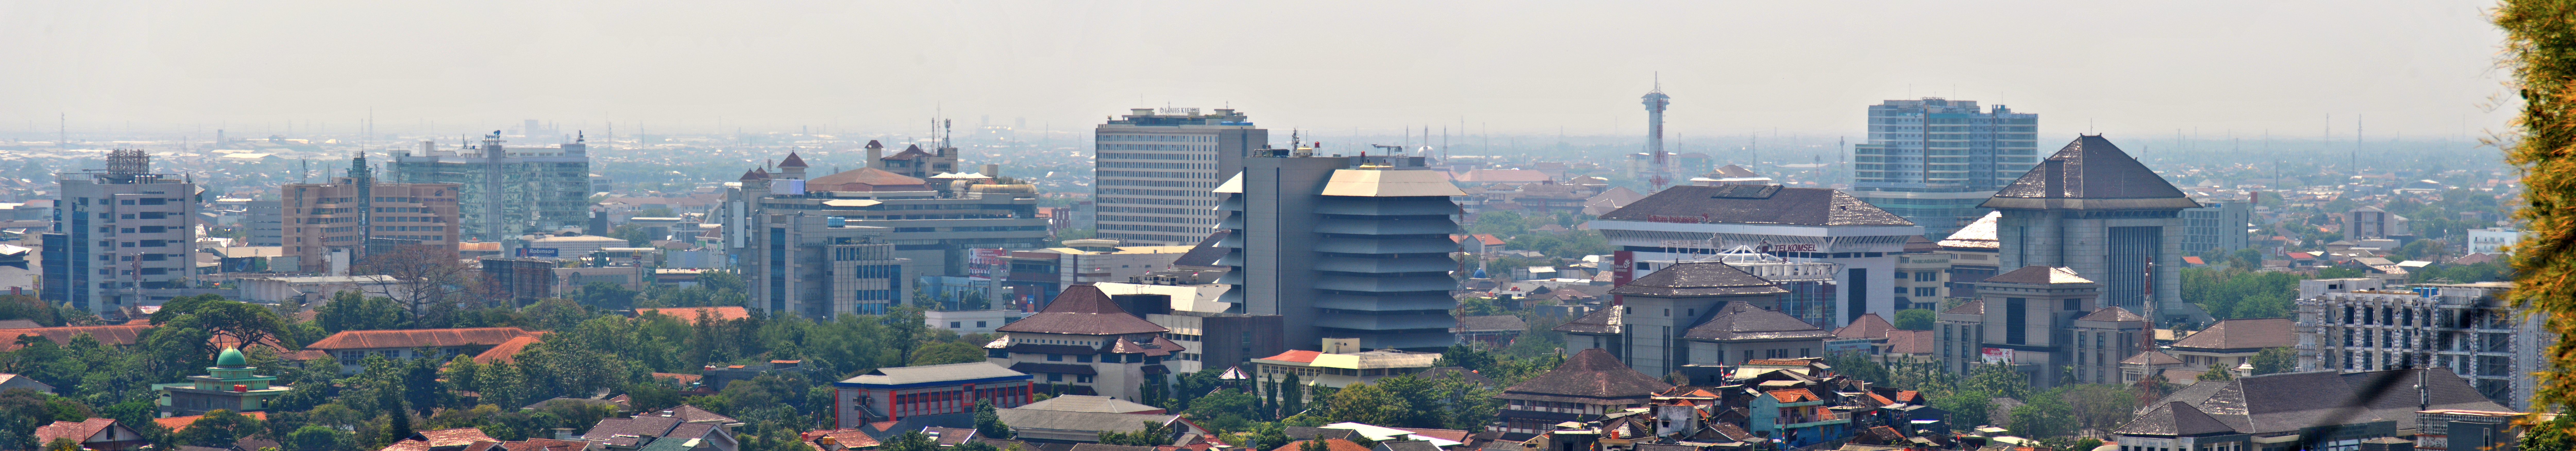 Photos of Semarang